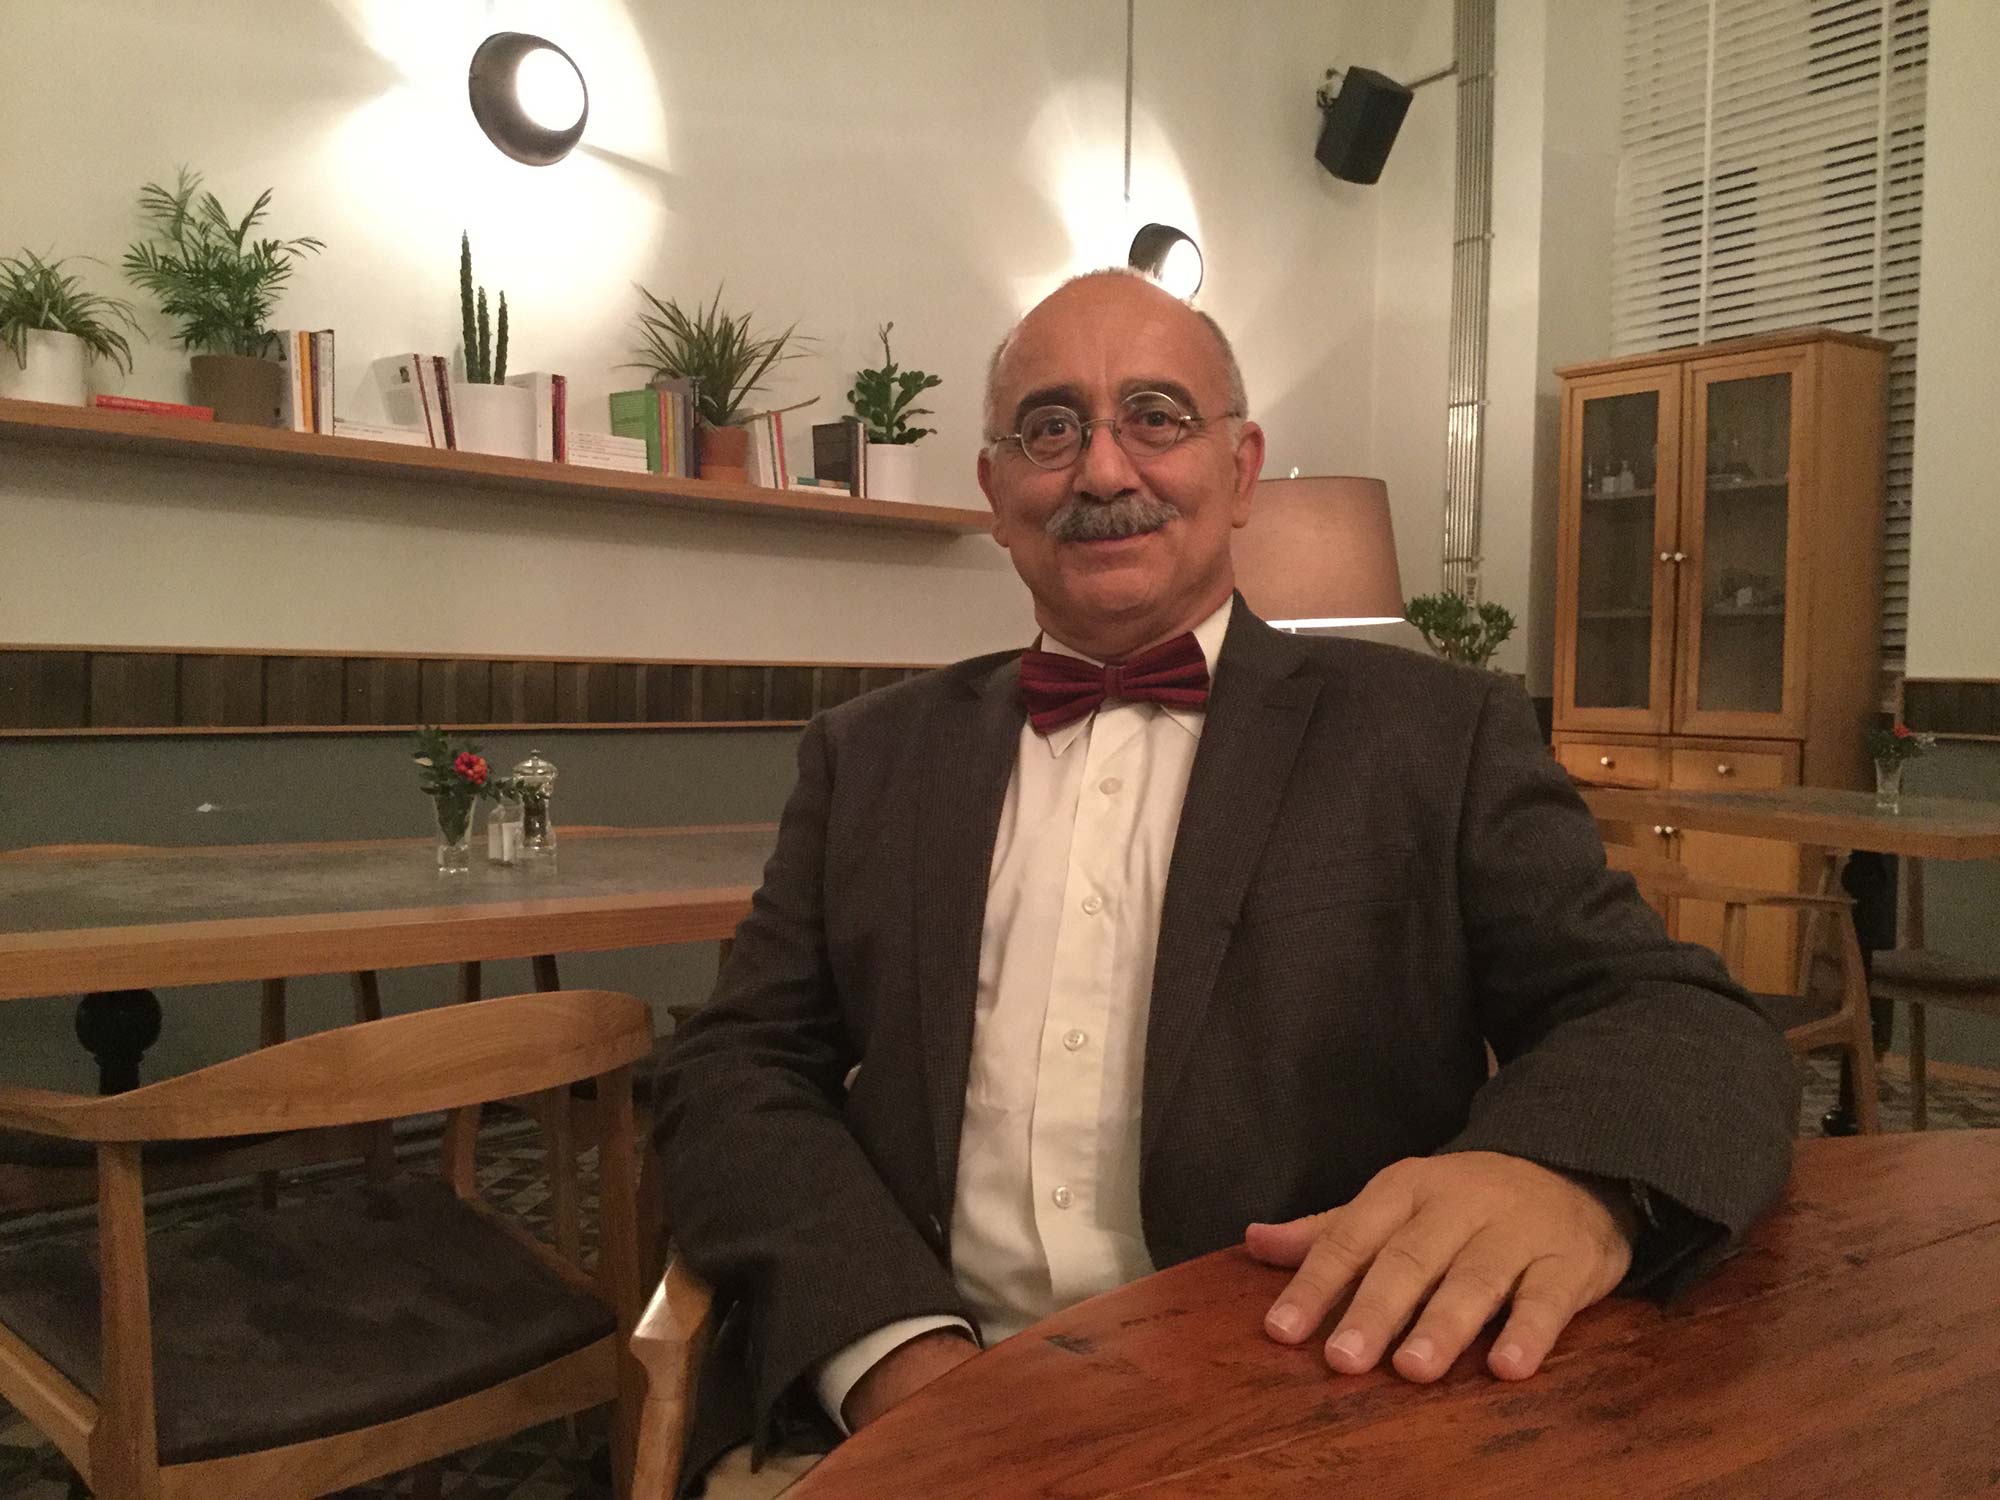 Turkey: Linguist finds himself locked up for free speech